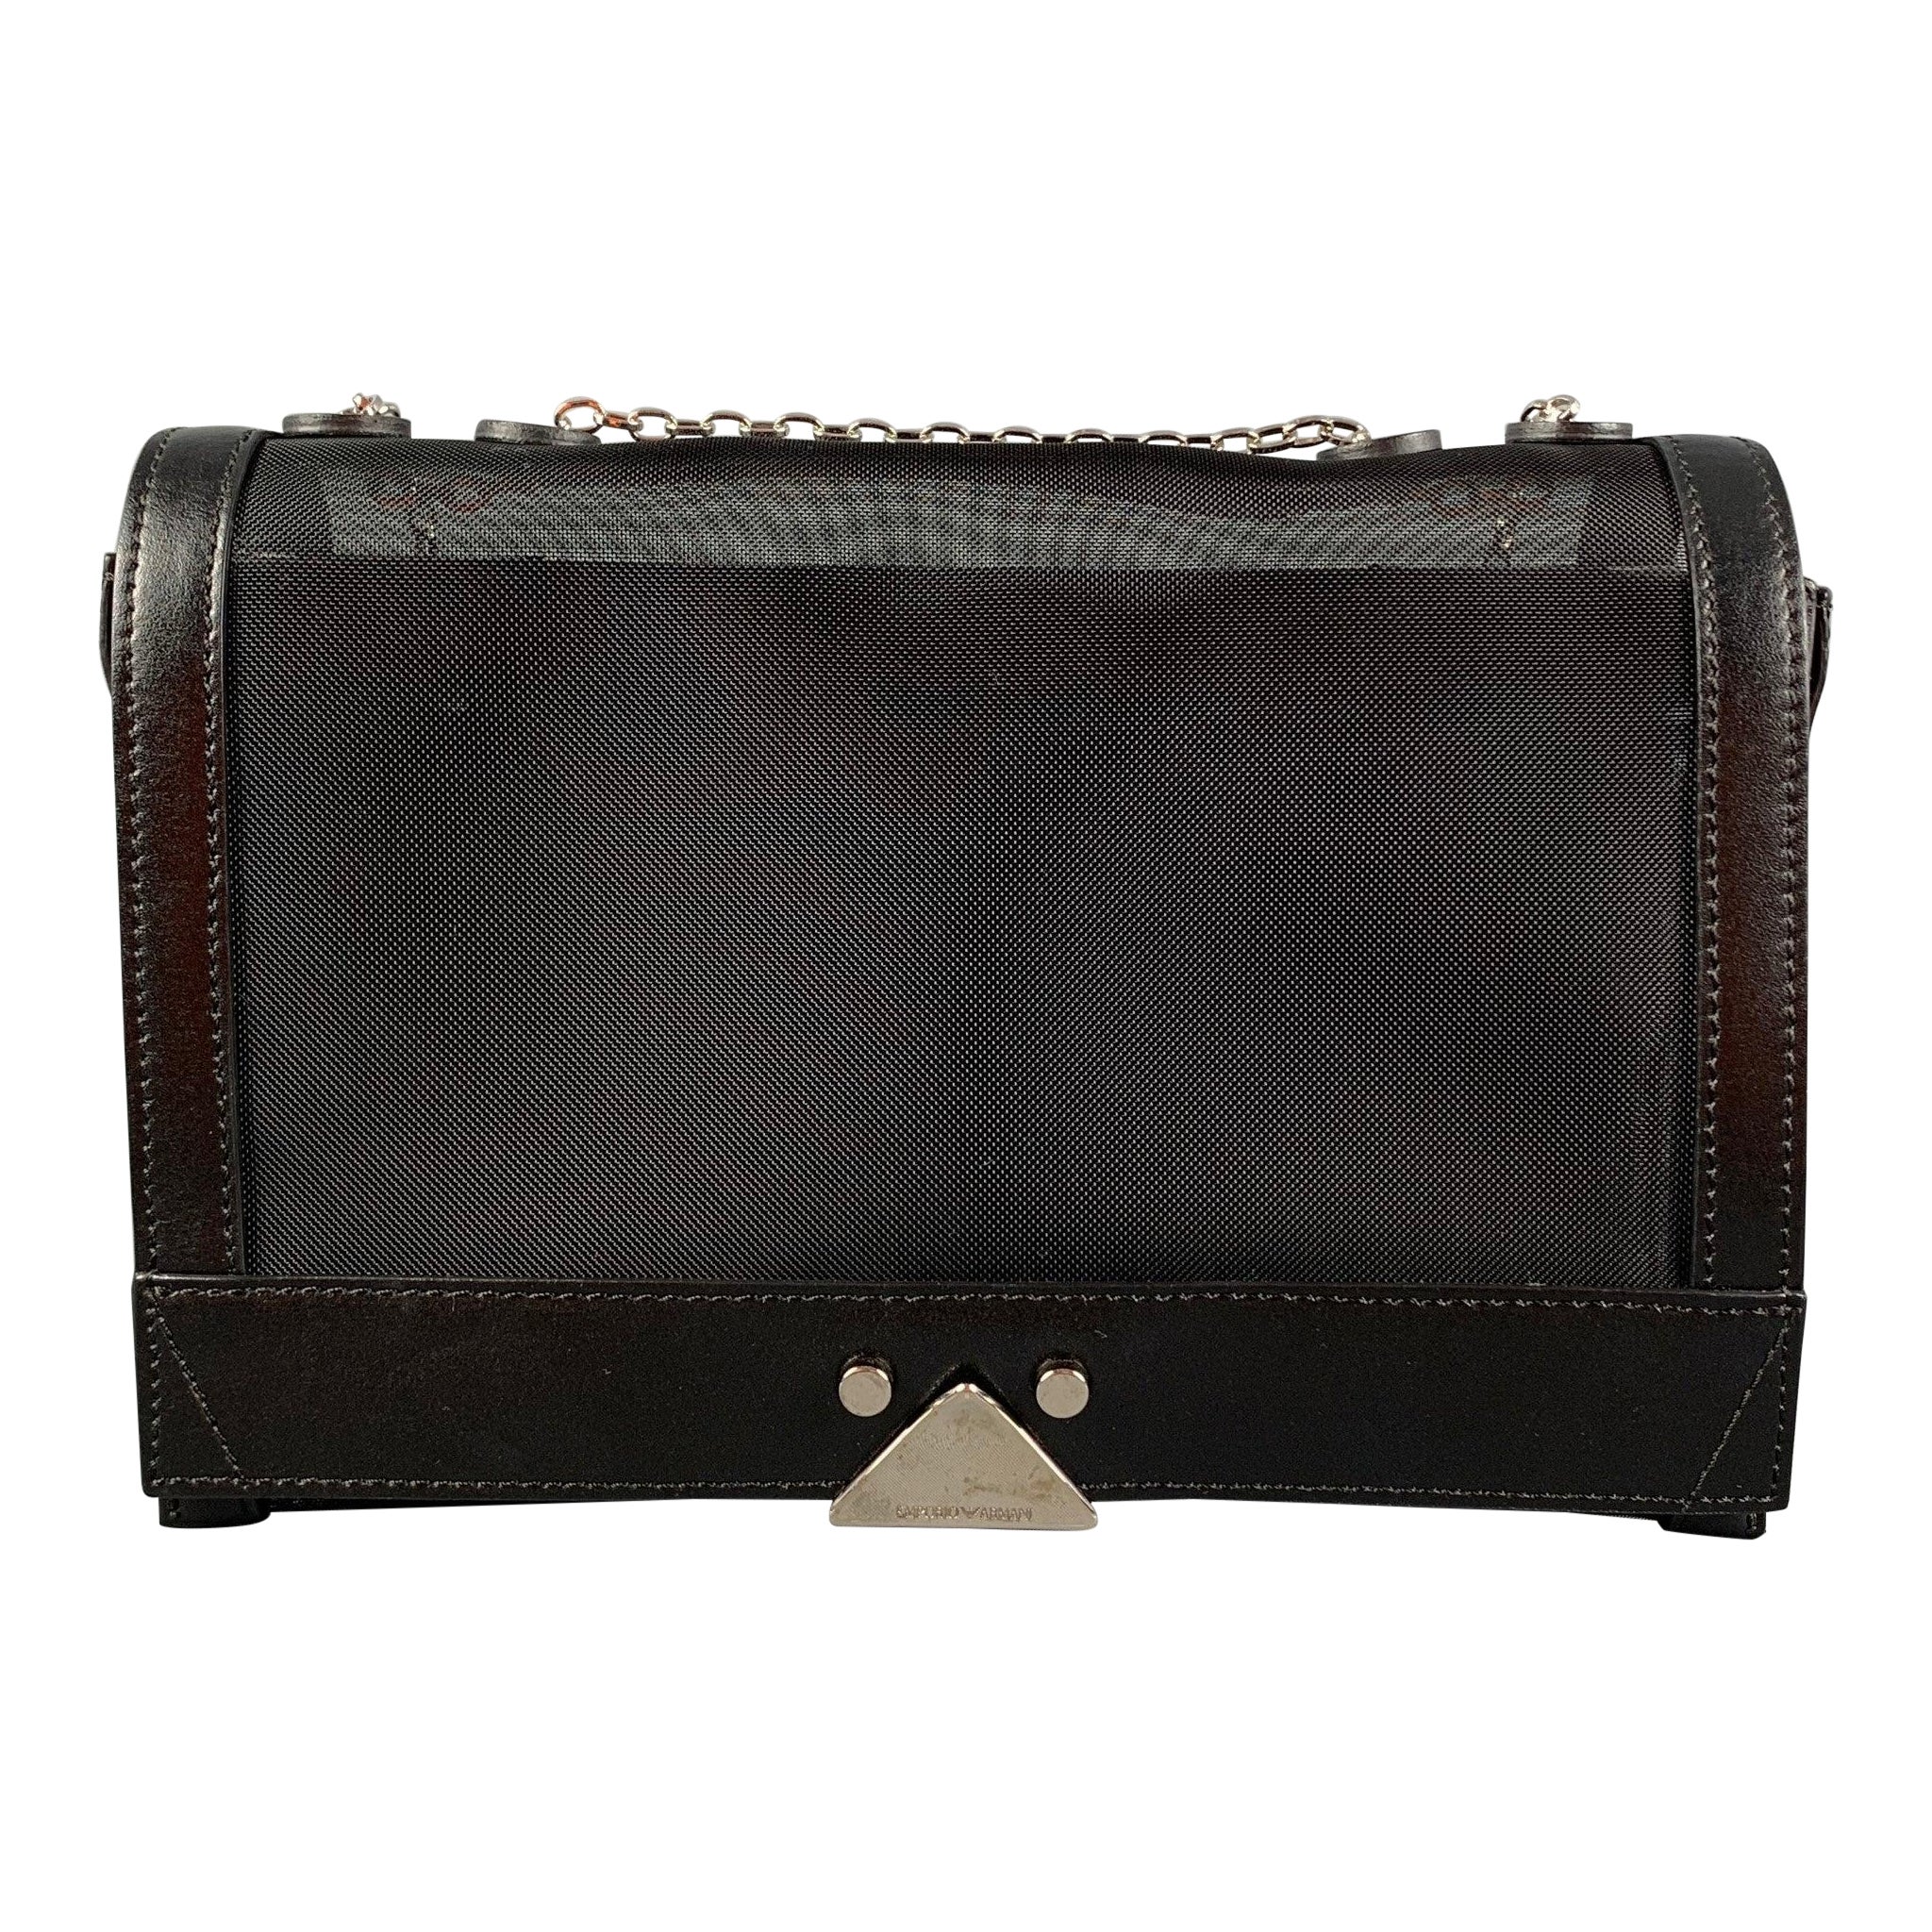 EMPORIO ARMANI Black Silver Mesh Leather Nylon Handbag For Sale